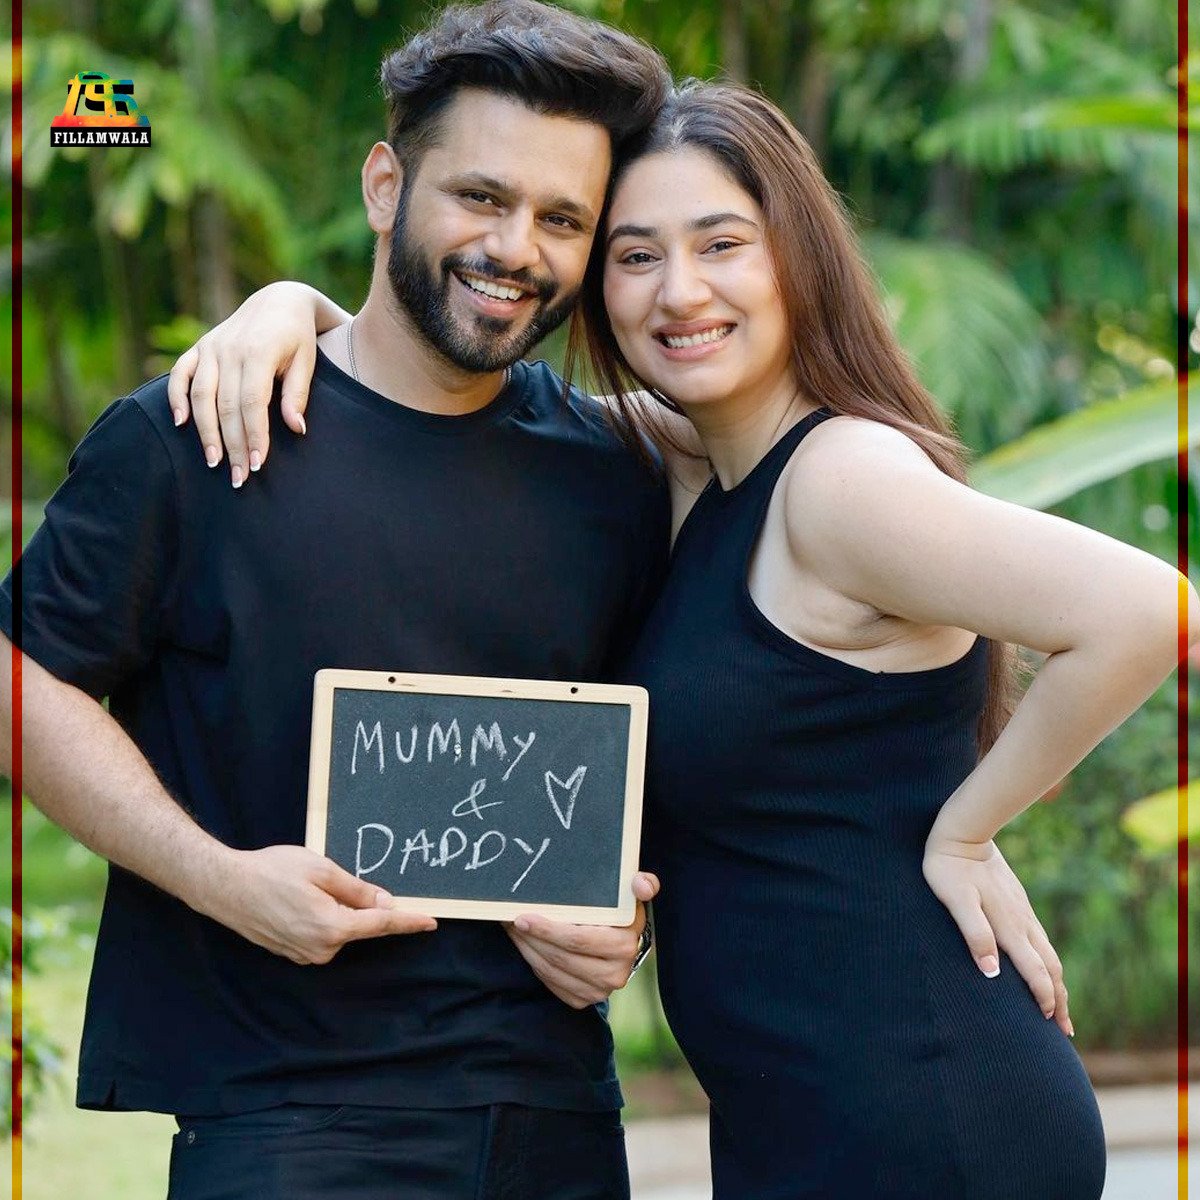 Disha Parmar and Rahul Vaidya ready to welcome their first child...😍❤️
.
.
.
#mommypapa #dishaparmarfanclub #rahulvaidya #momdaughter #mom #dady #actresslife #happymoment #Fillamwala